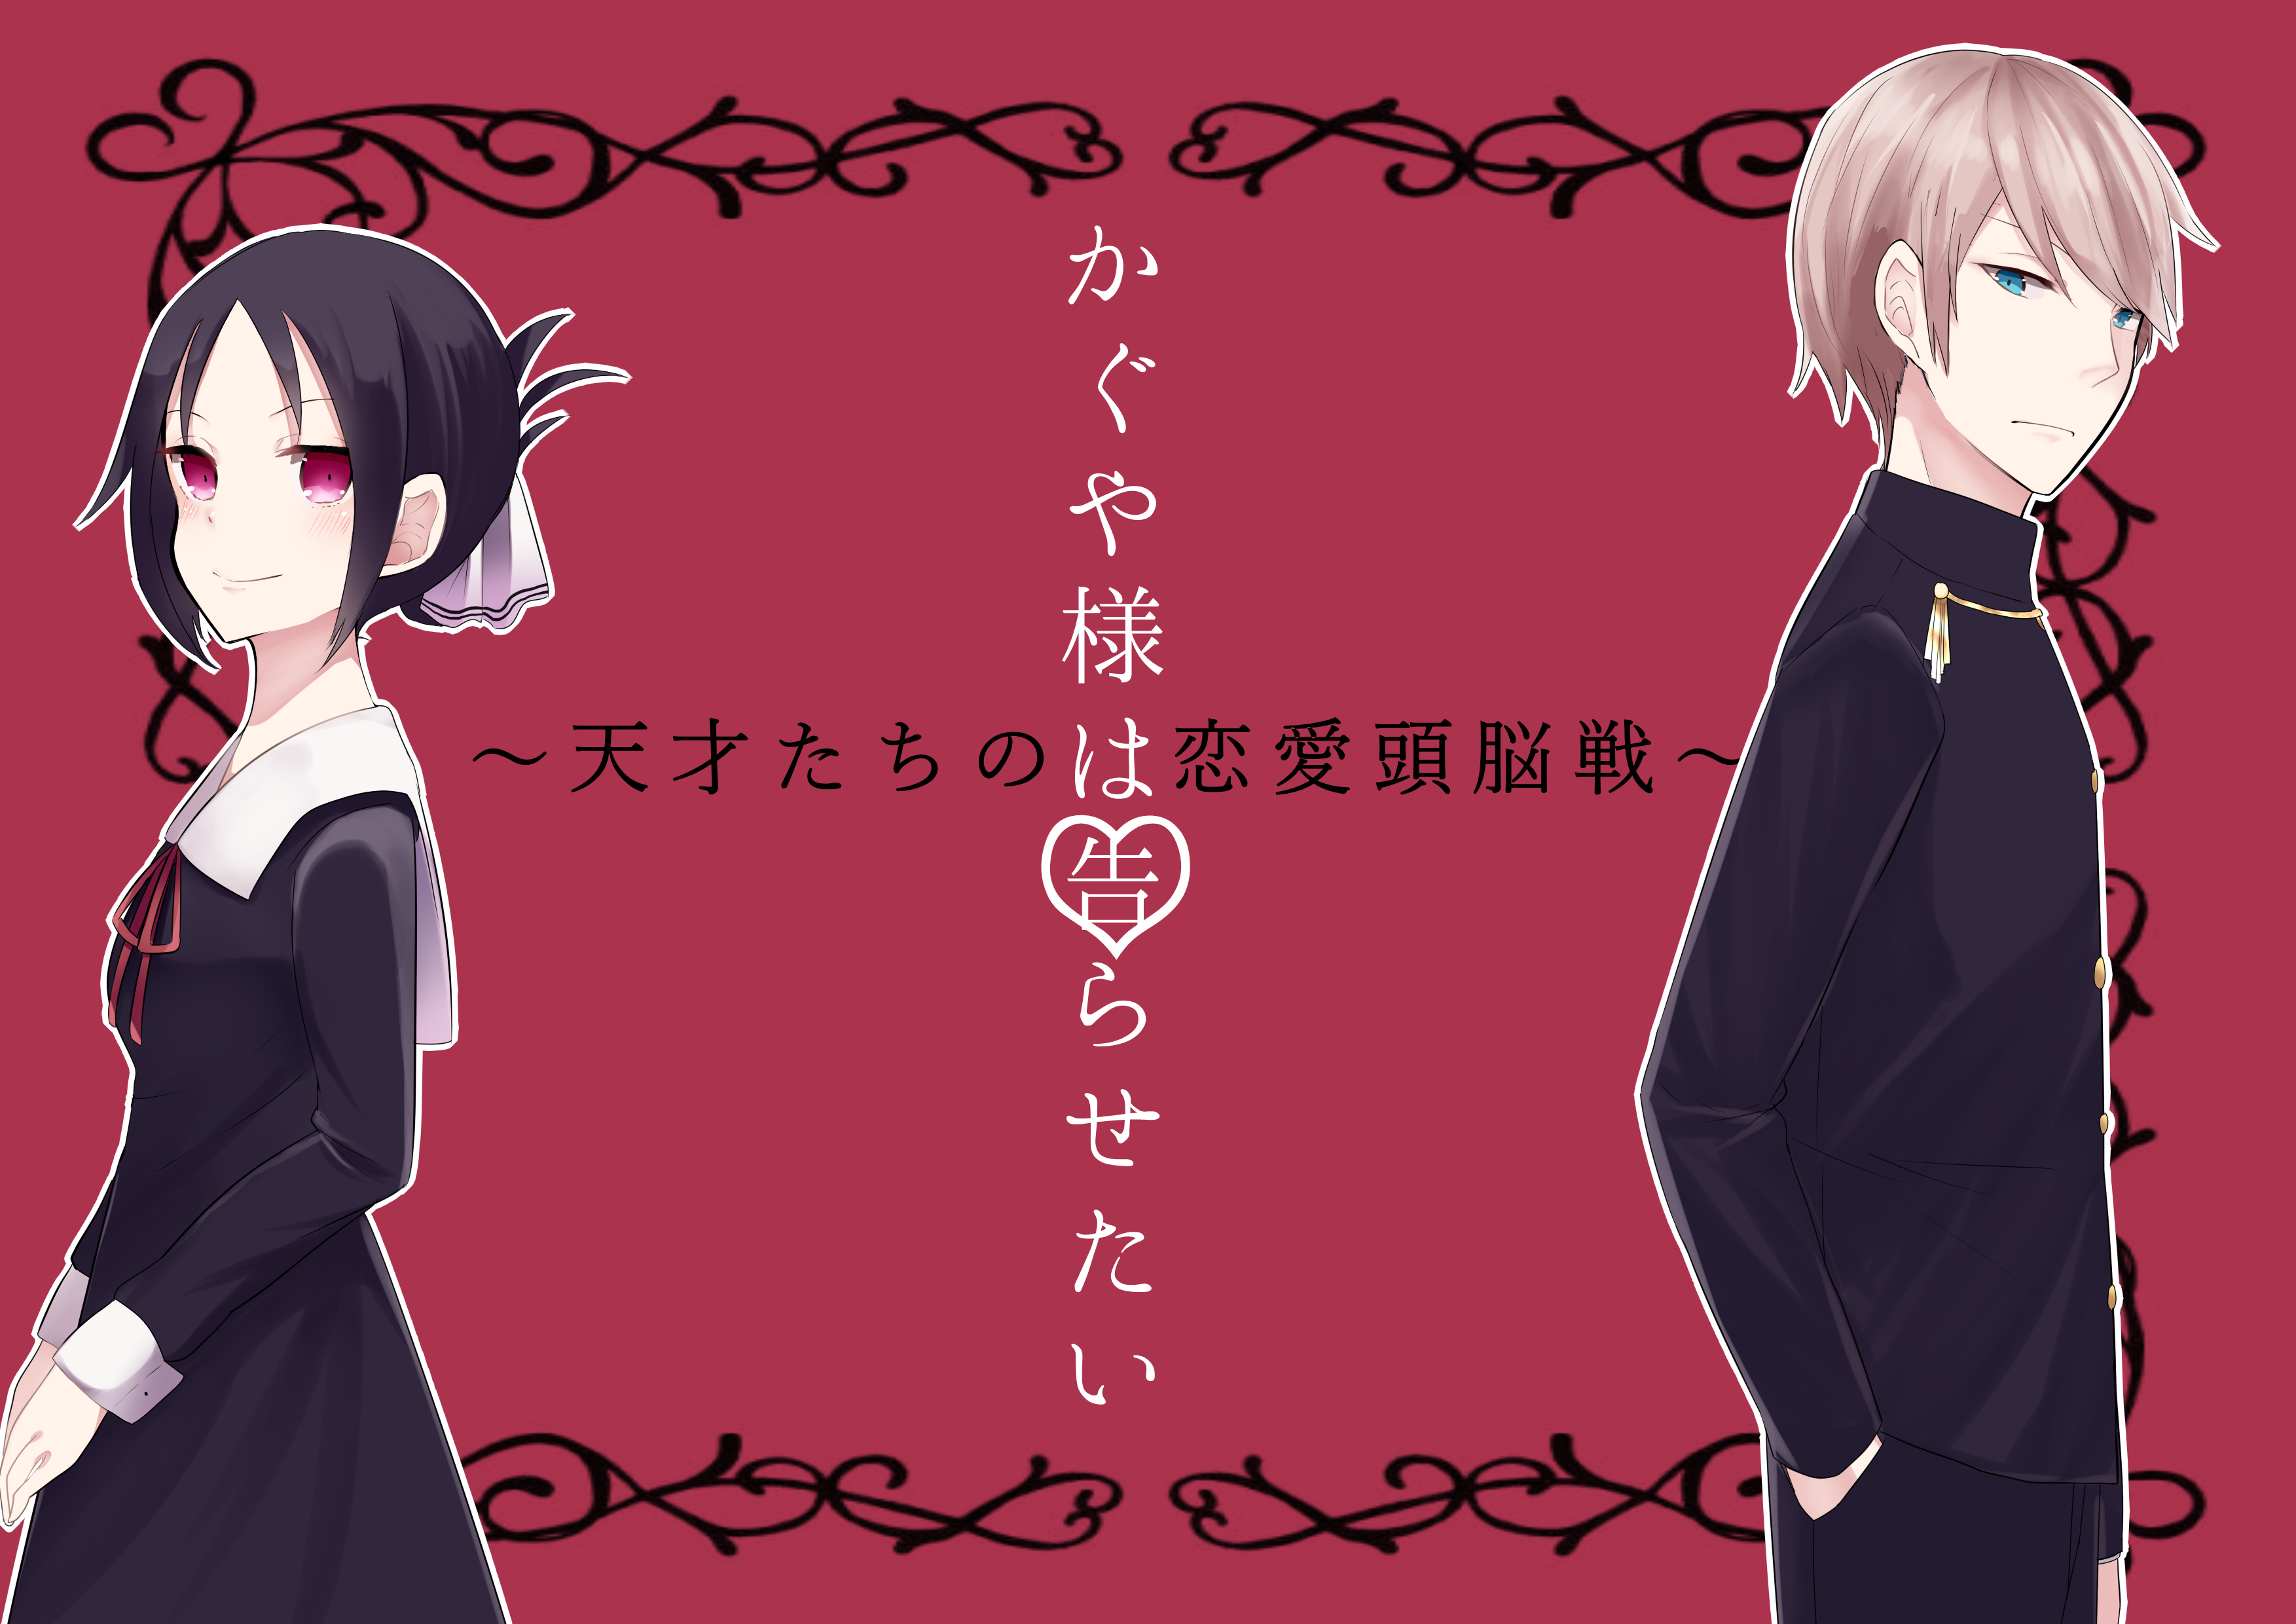 Anime Kaguya-sama: Love is War HD Wallpaper by グリコーゲン